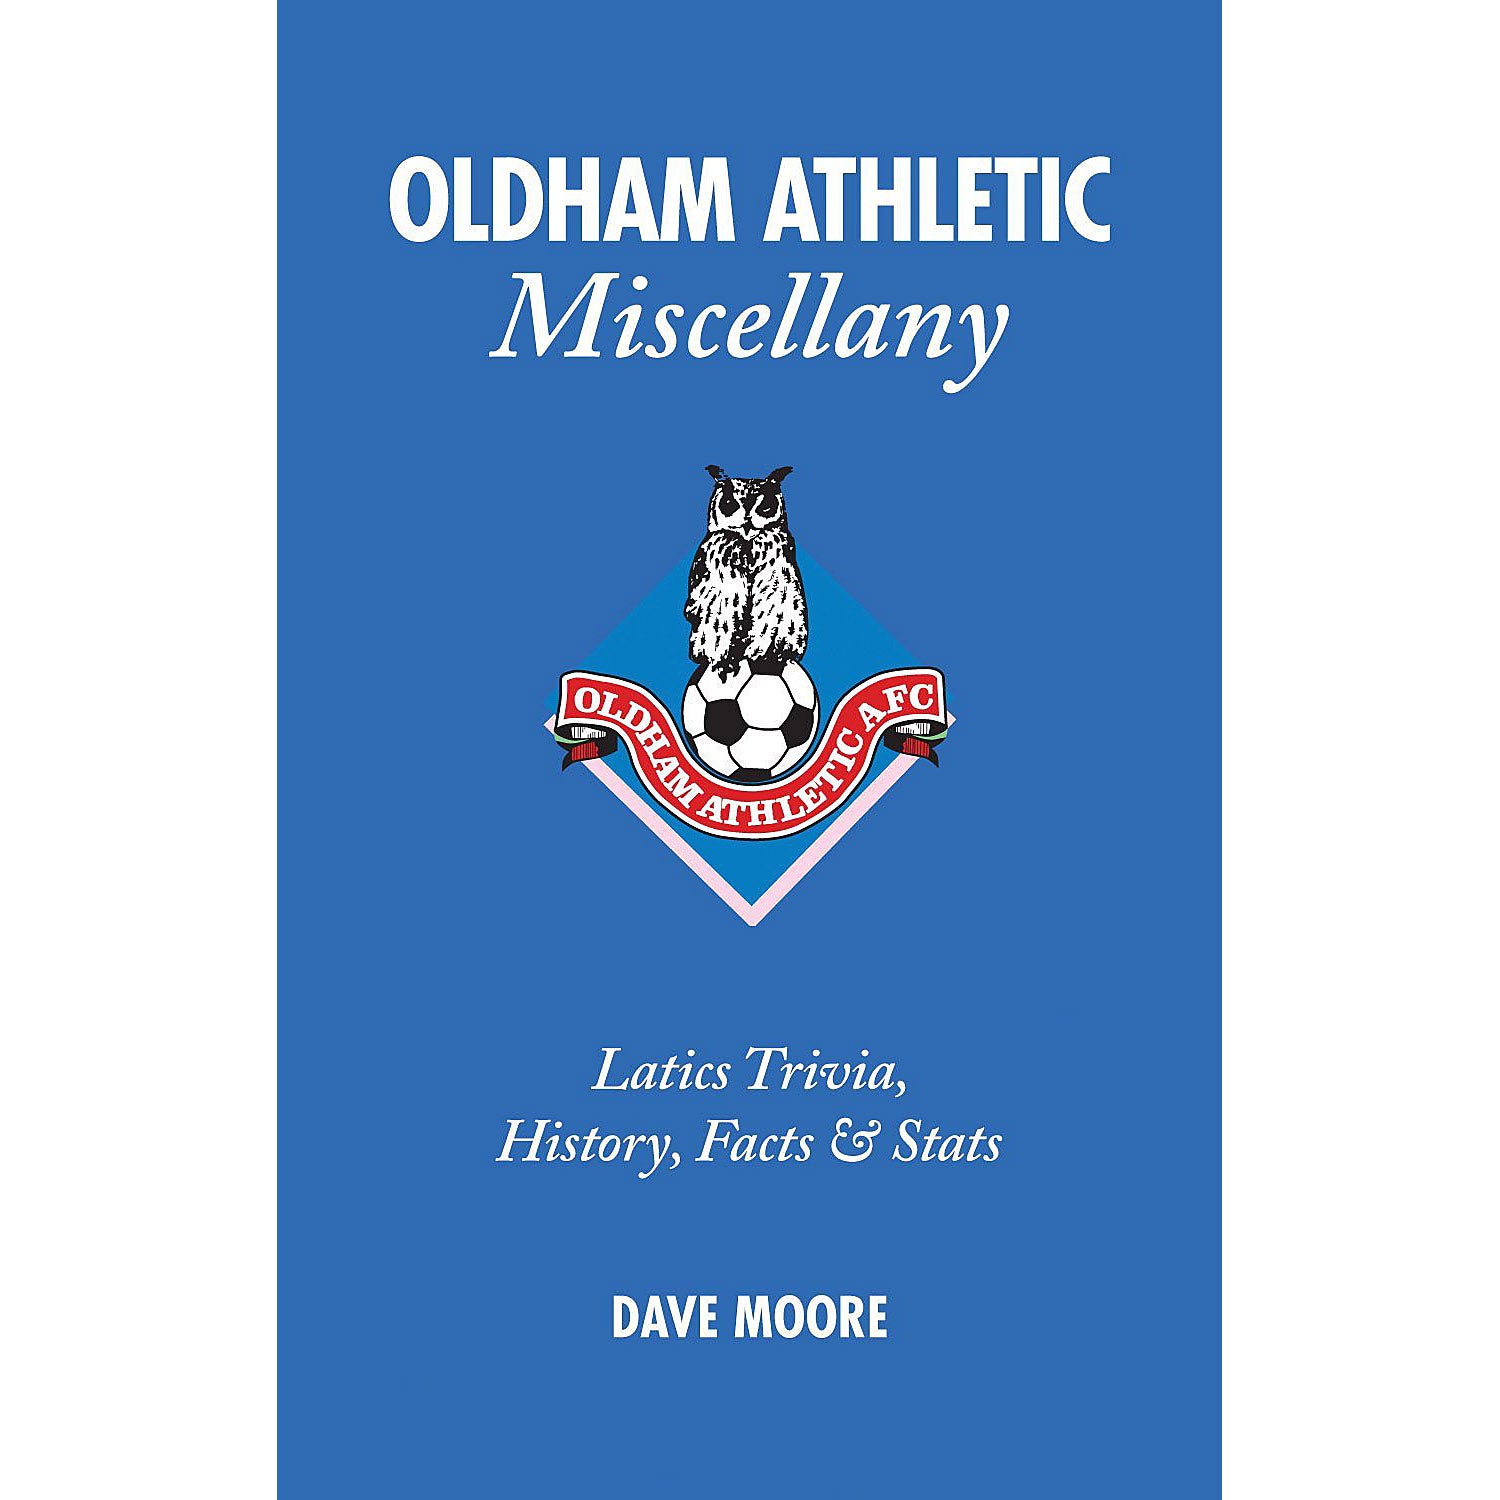 Oldham Athletic Miscellany – Latics Trivia, History, Facts & Stats